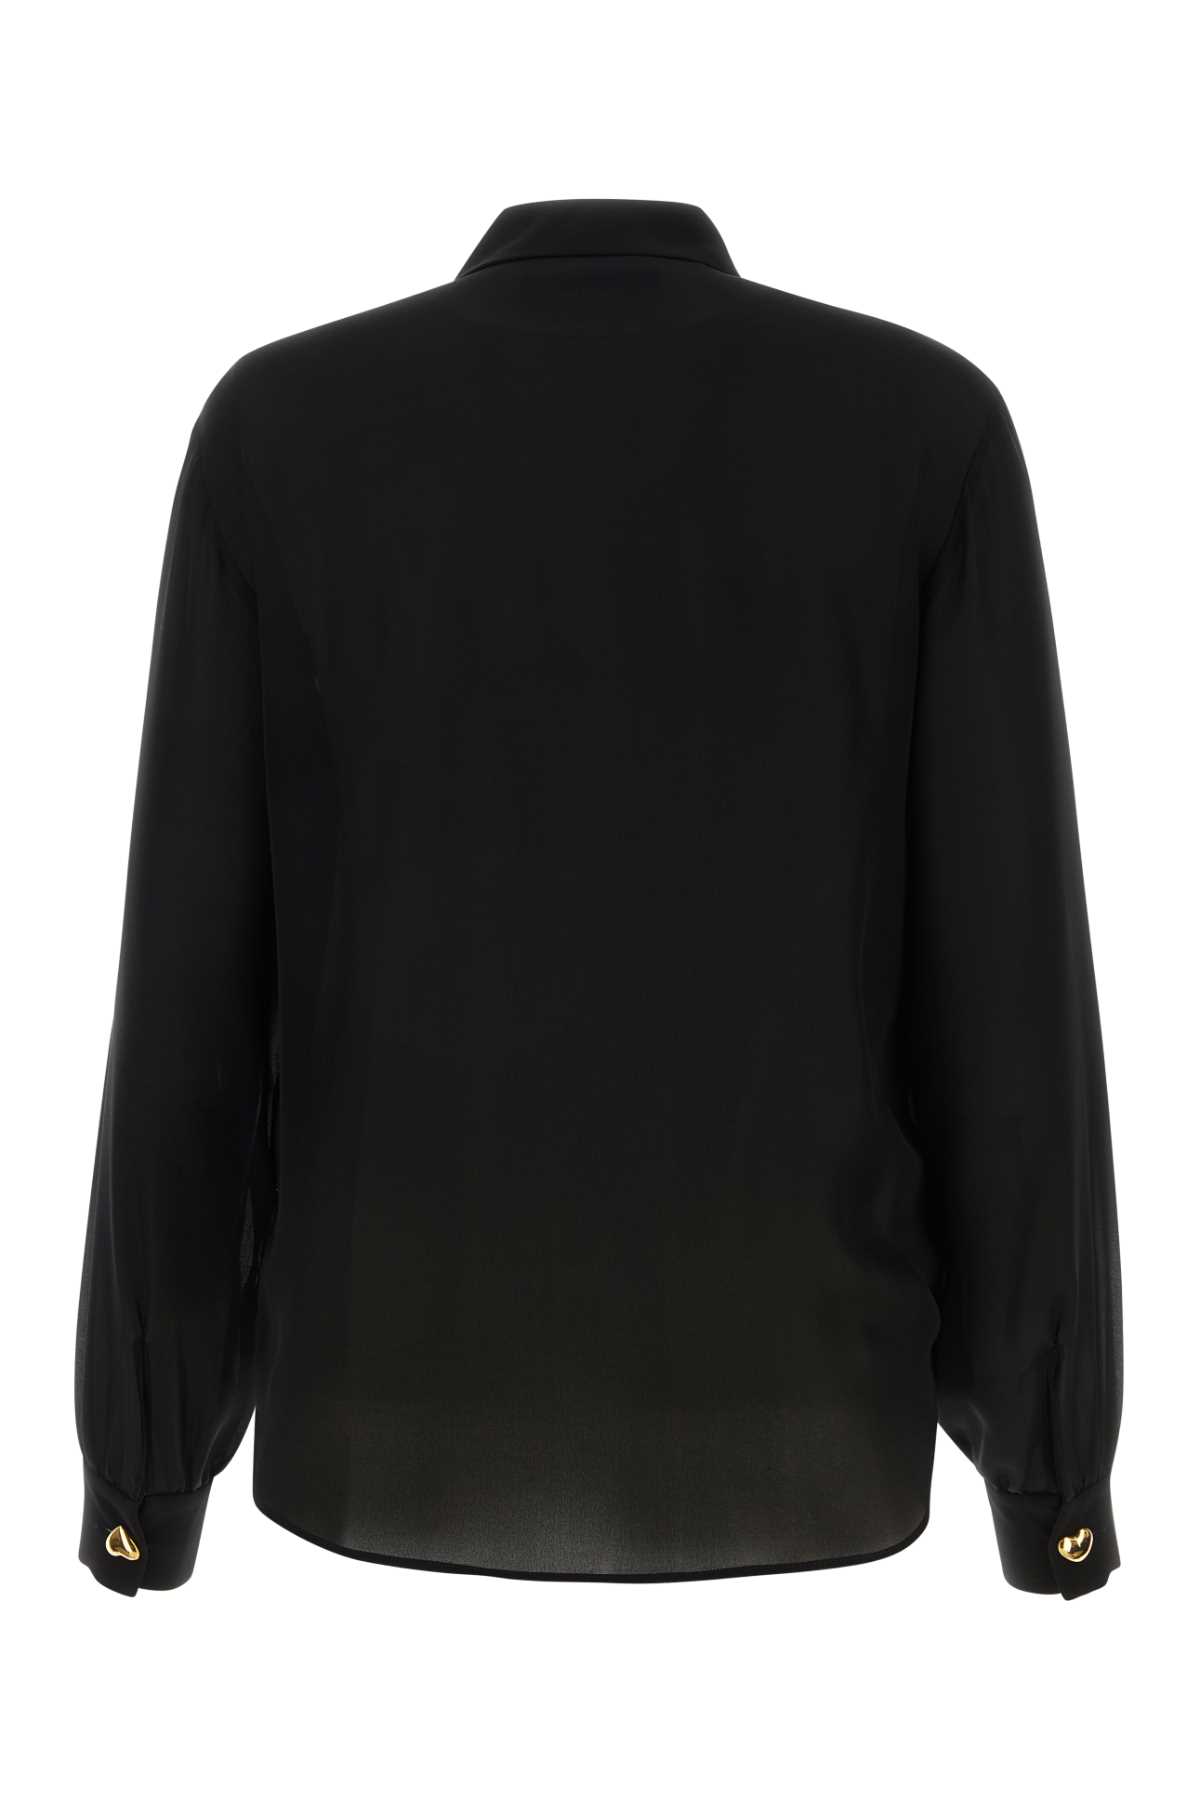 Moschino Black Silk Shirt In 0555